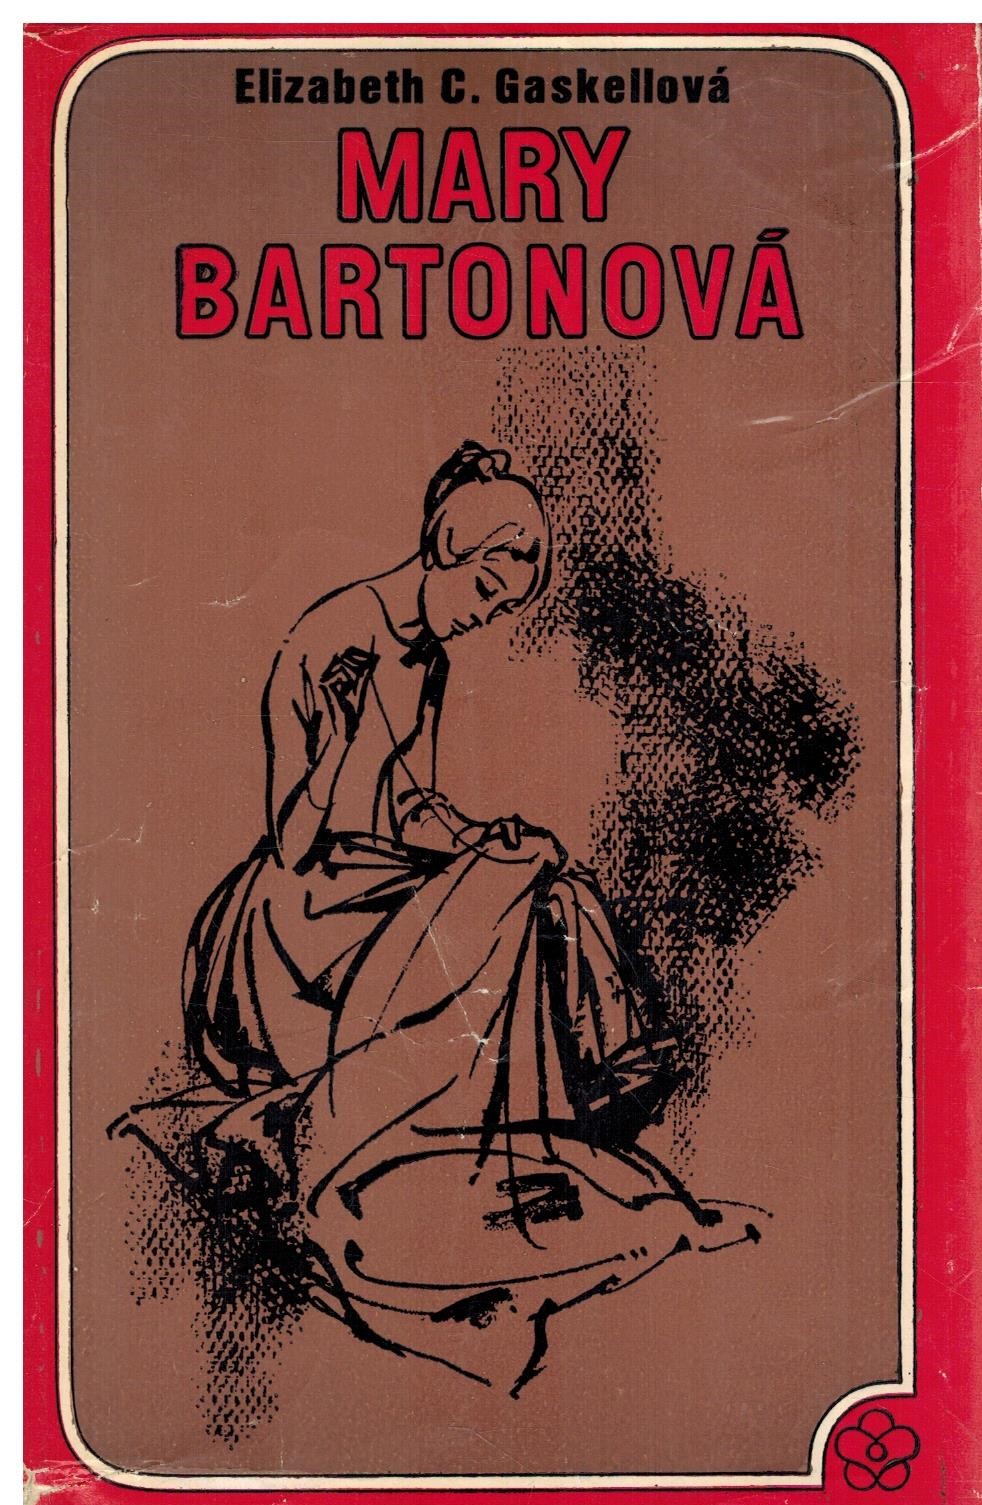 MARY BARTONOVÁ